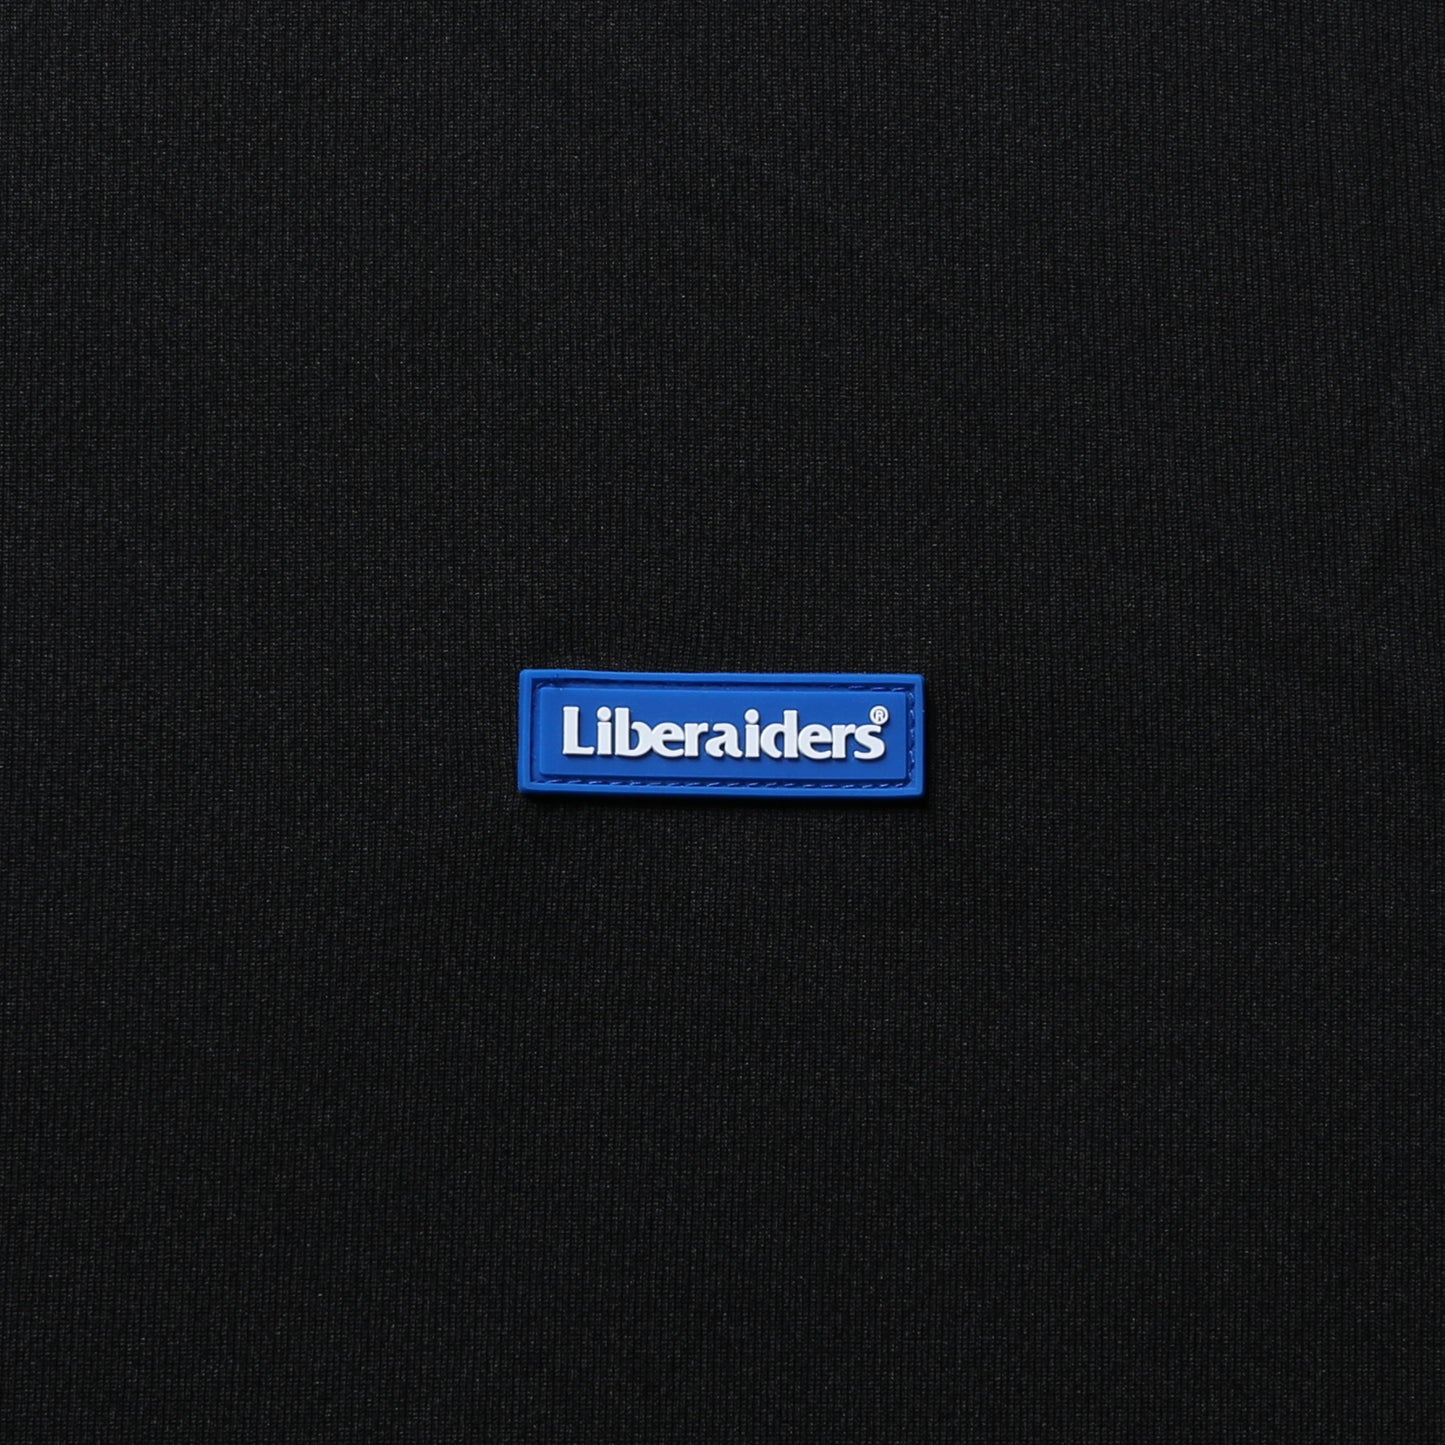 Liberaiders ® (リベレイダース)/OG LOGO L/S DRY TEE 70505 / BLACK